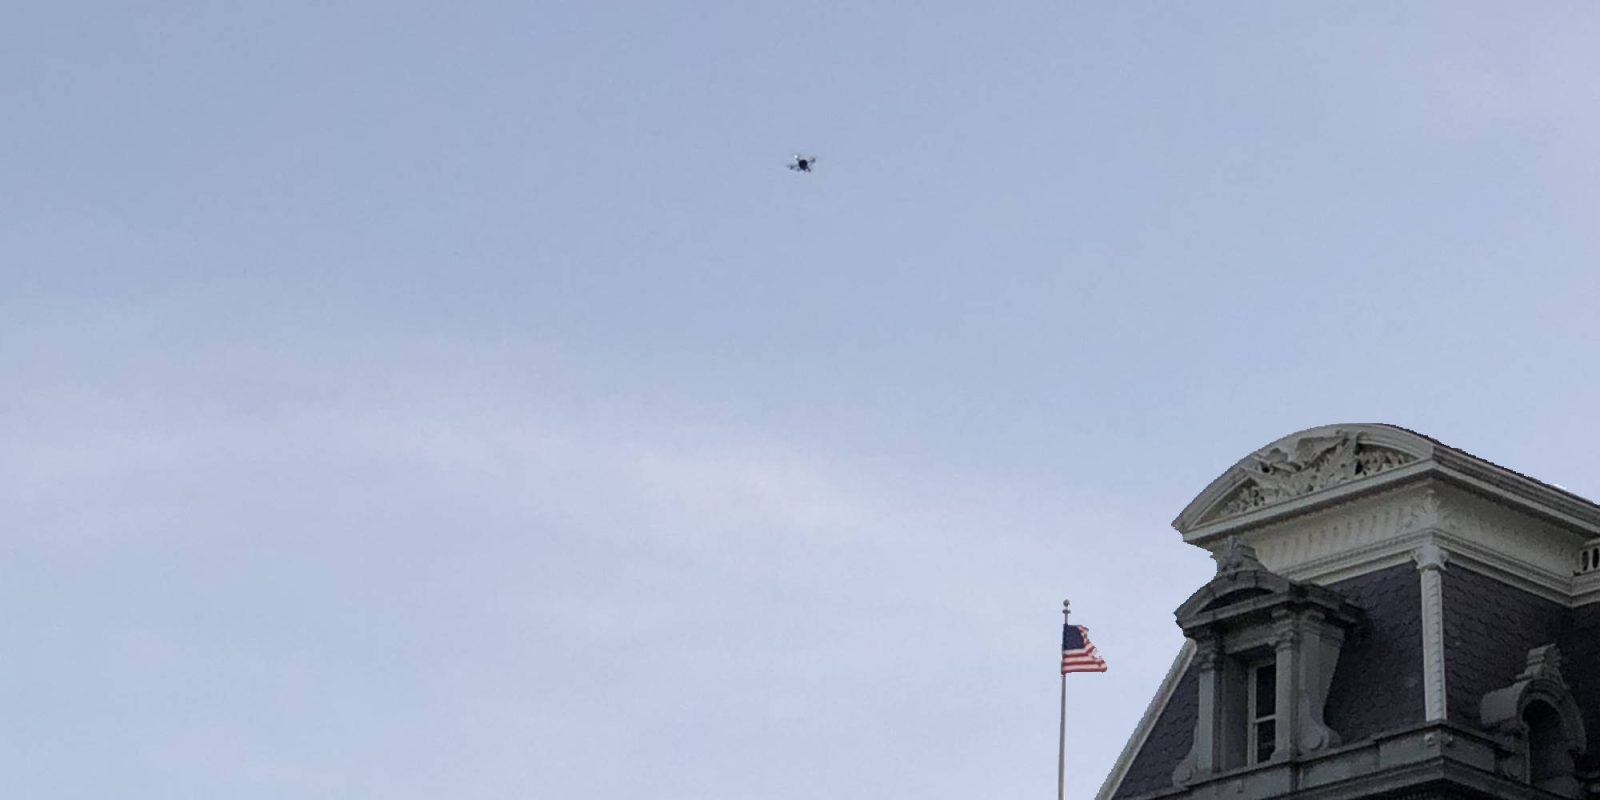 drone spotted EEOB Washington